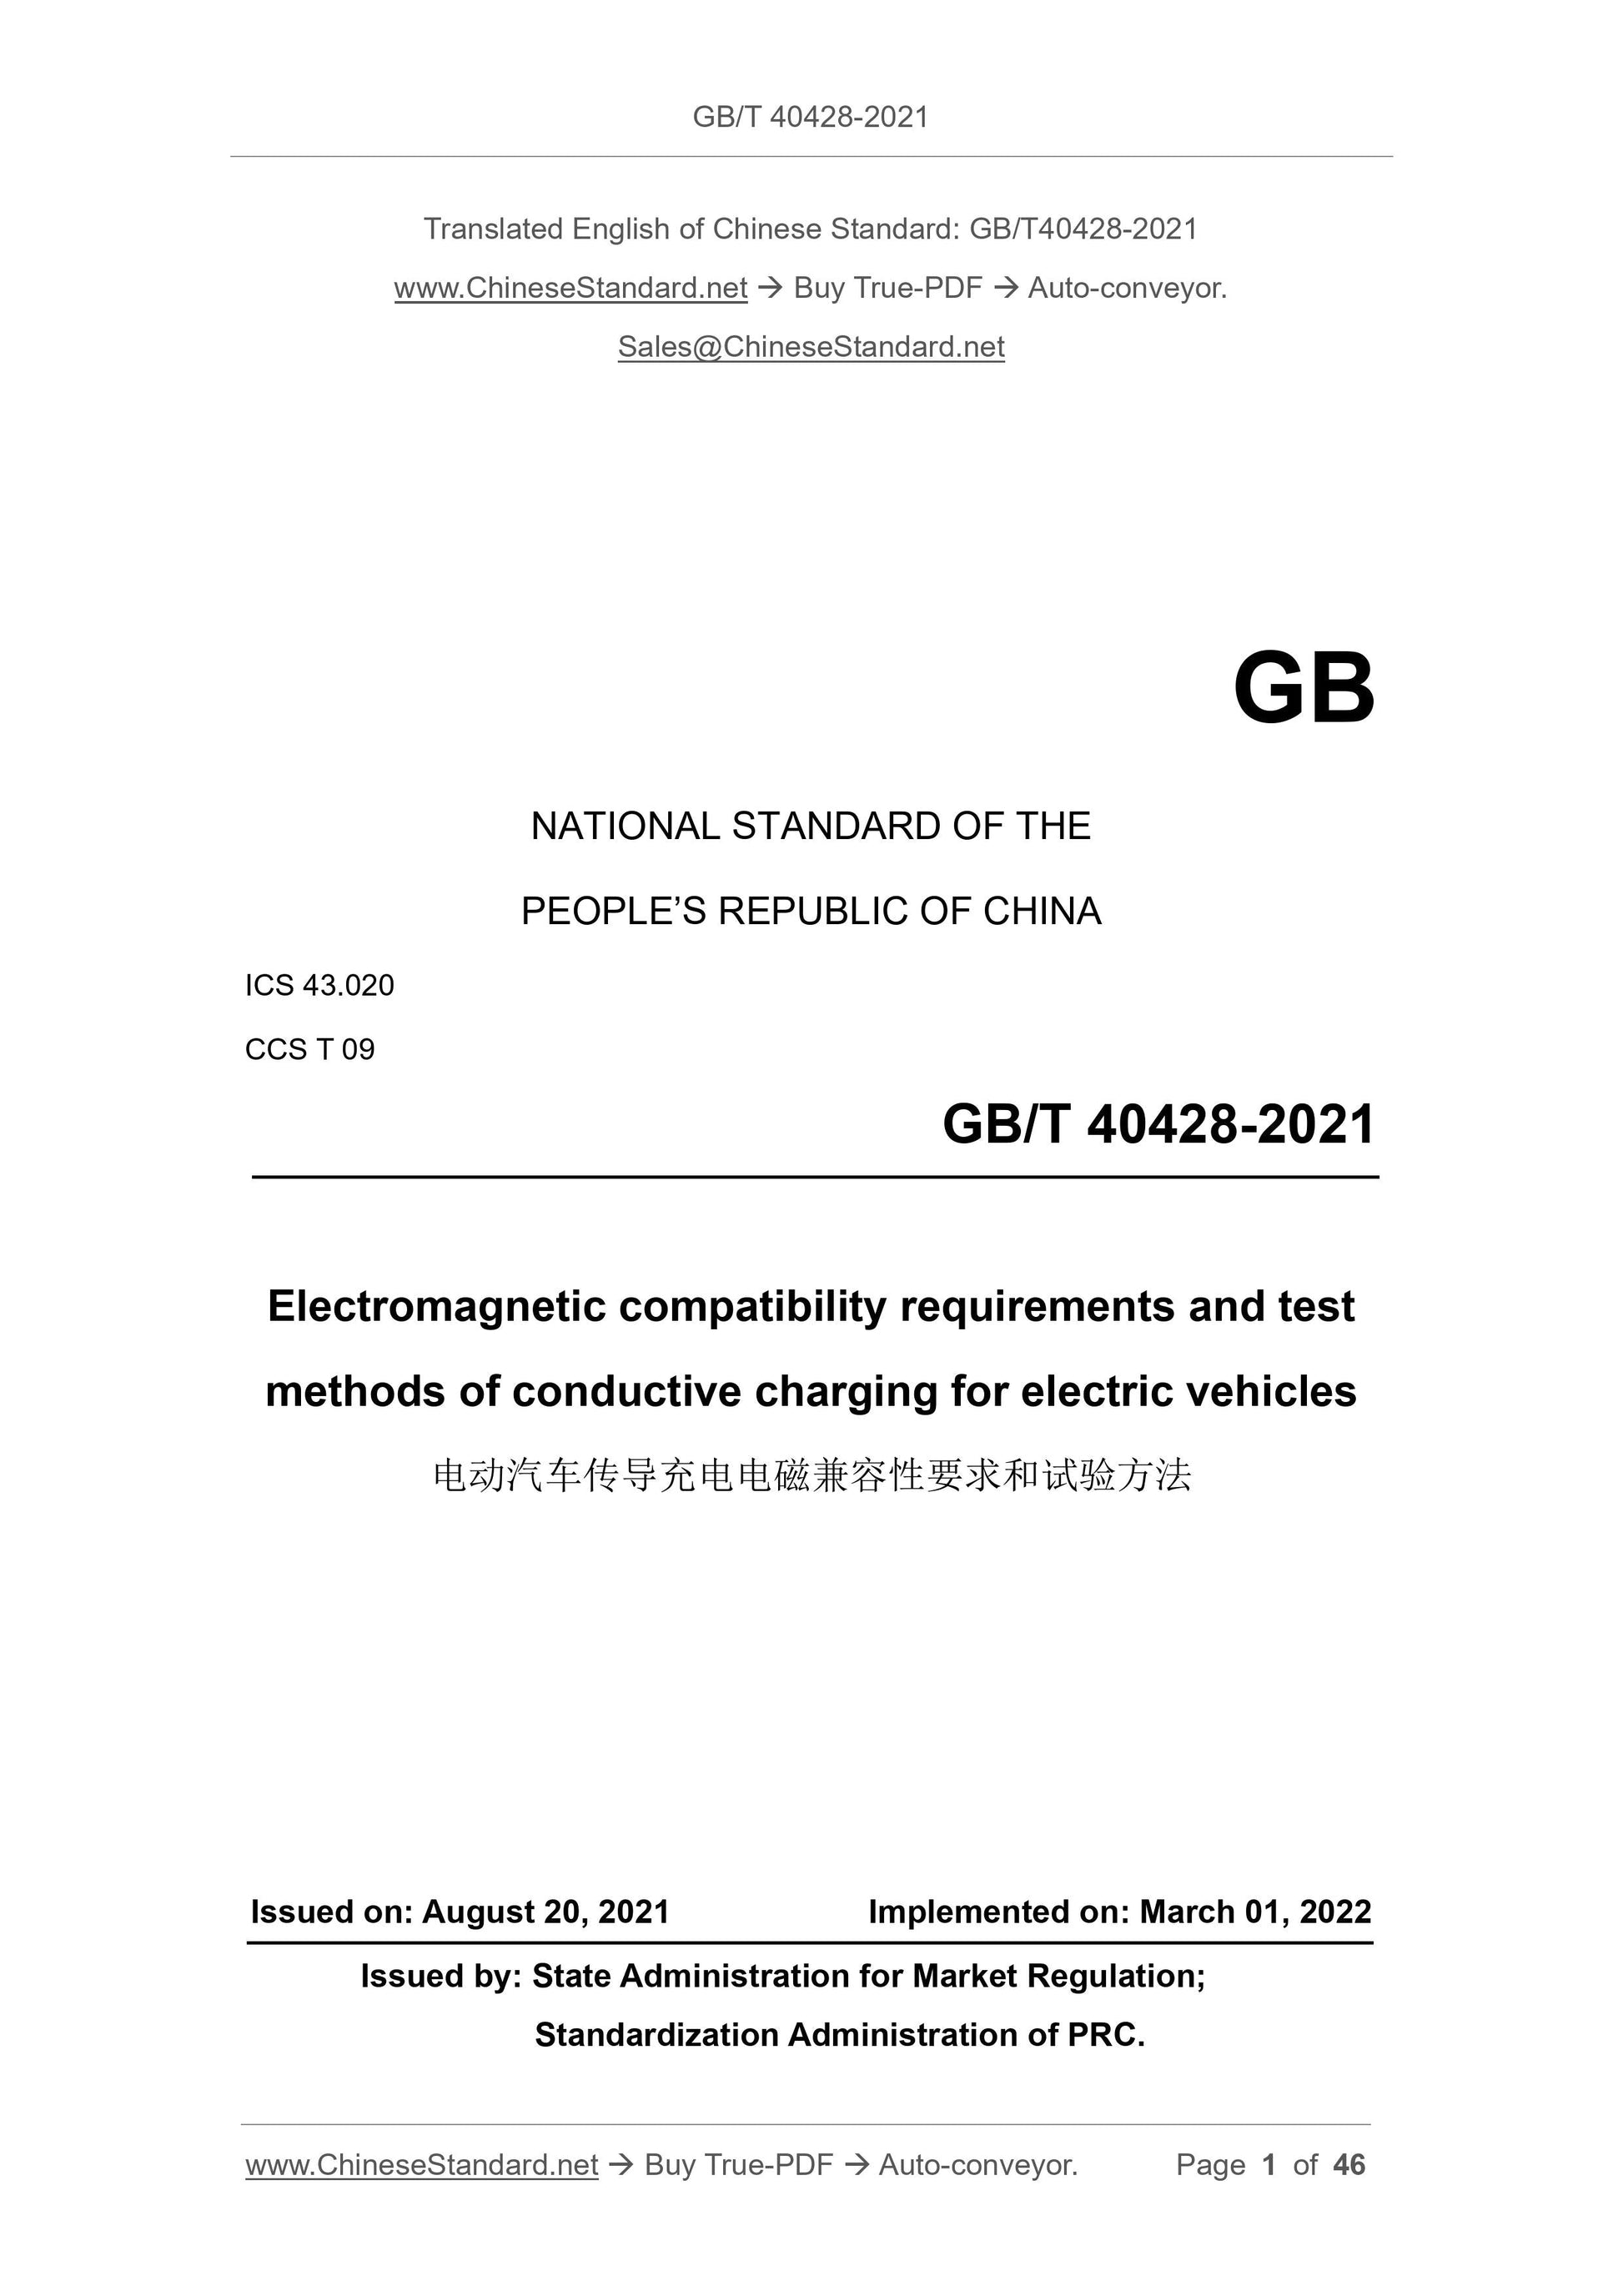 GBT40428-2021 Page 1